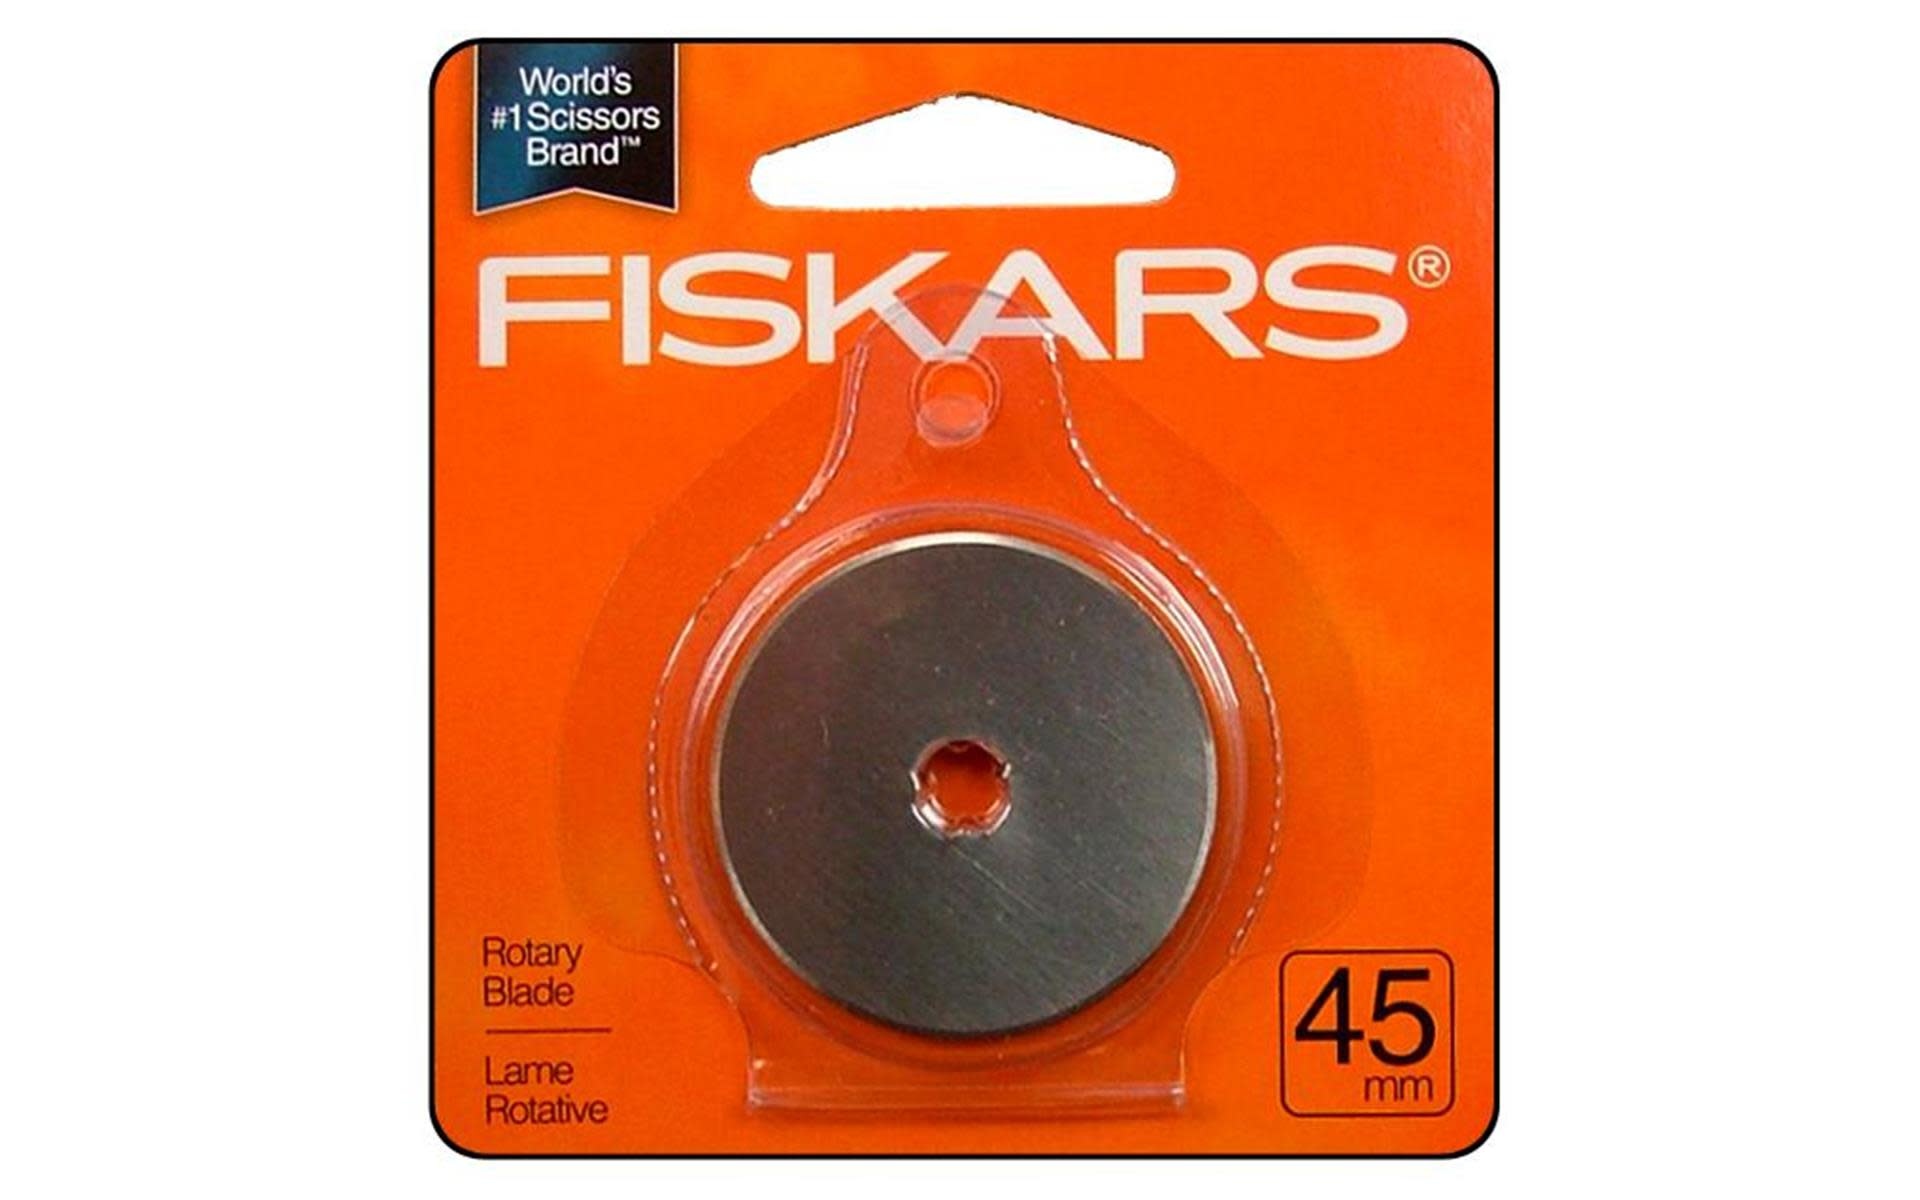 Fiskars Rotary Cutter 45mm Replacement Blades - 5-Pack - 45mm